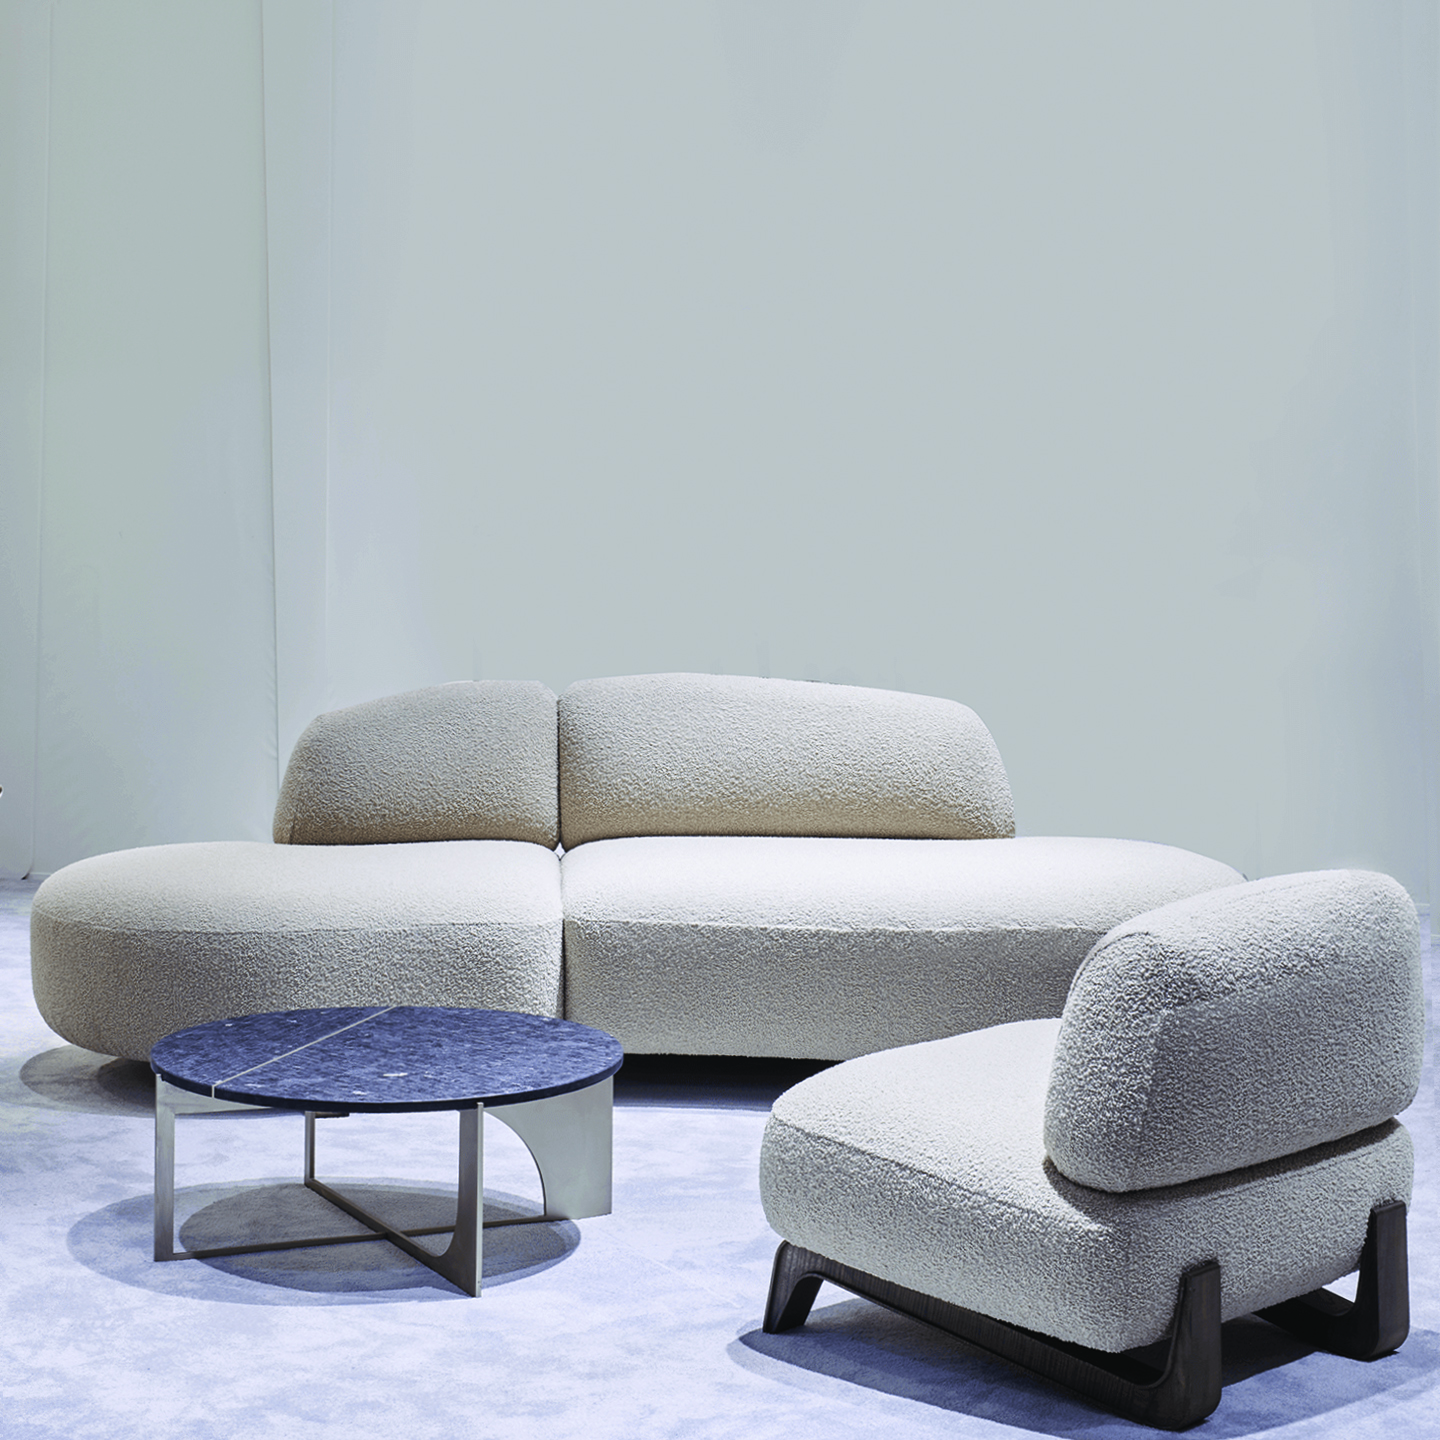 Vao sofa 250 | GREENKISS, Sofas | Paolo Castelli EN